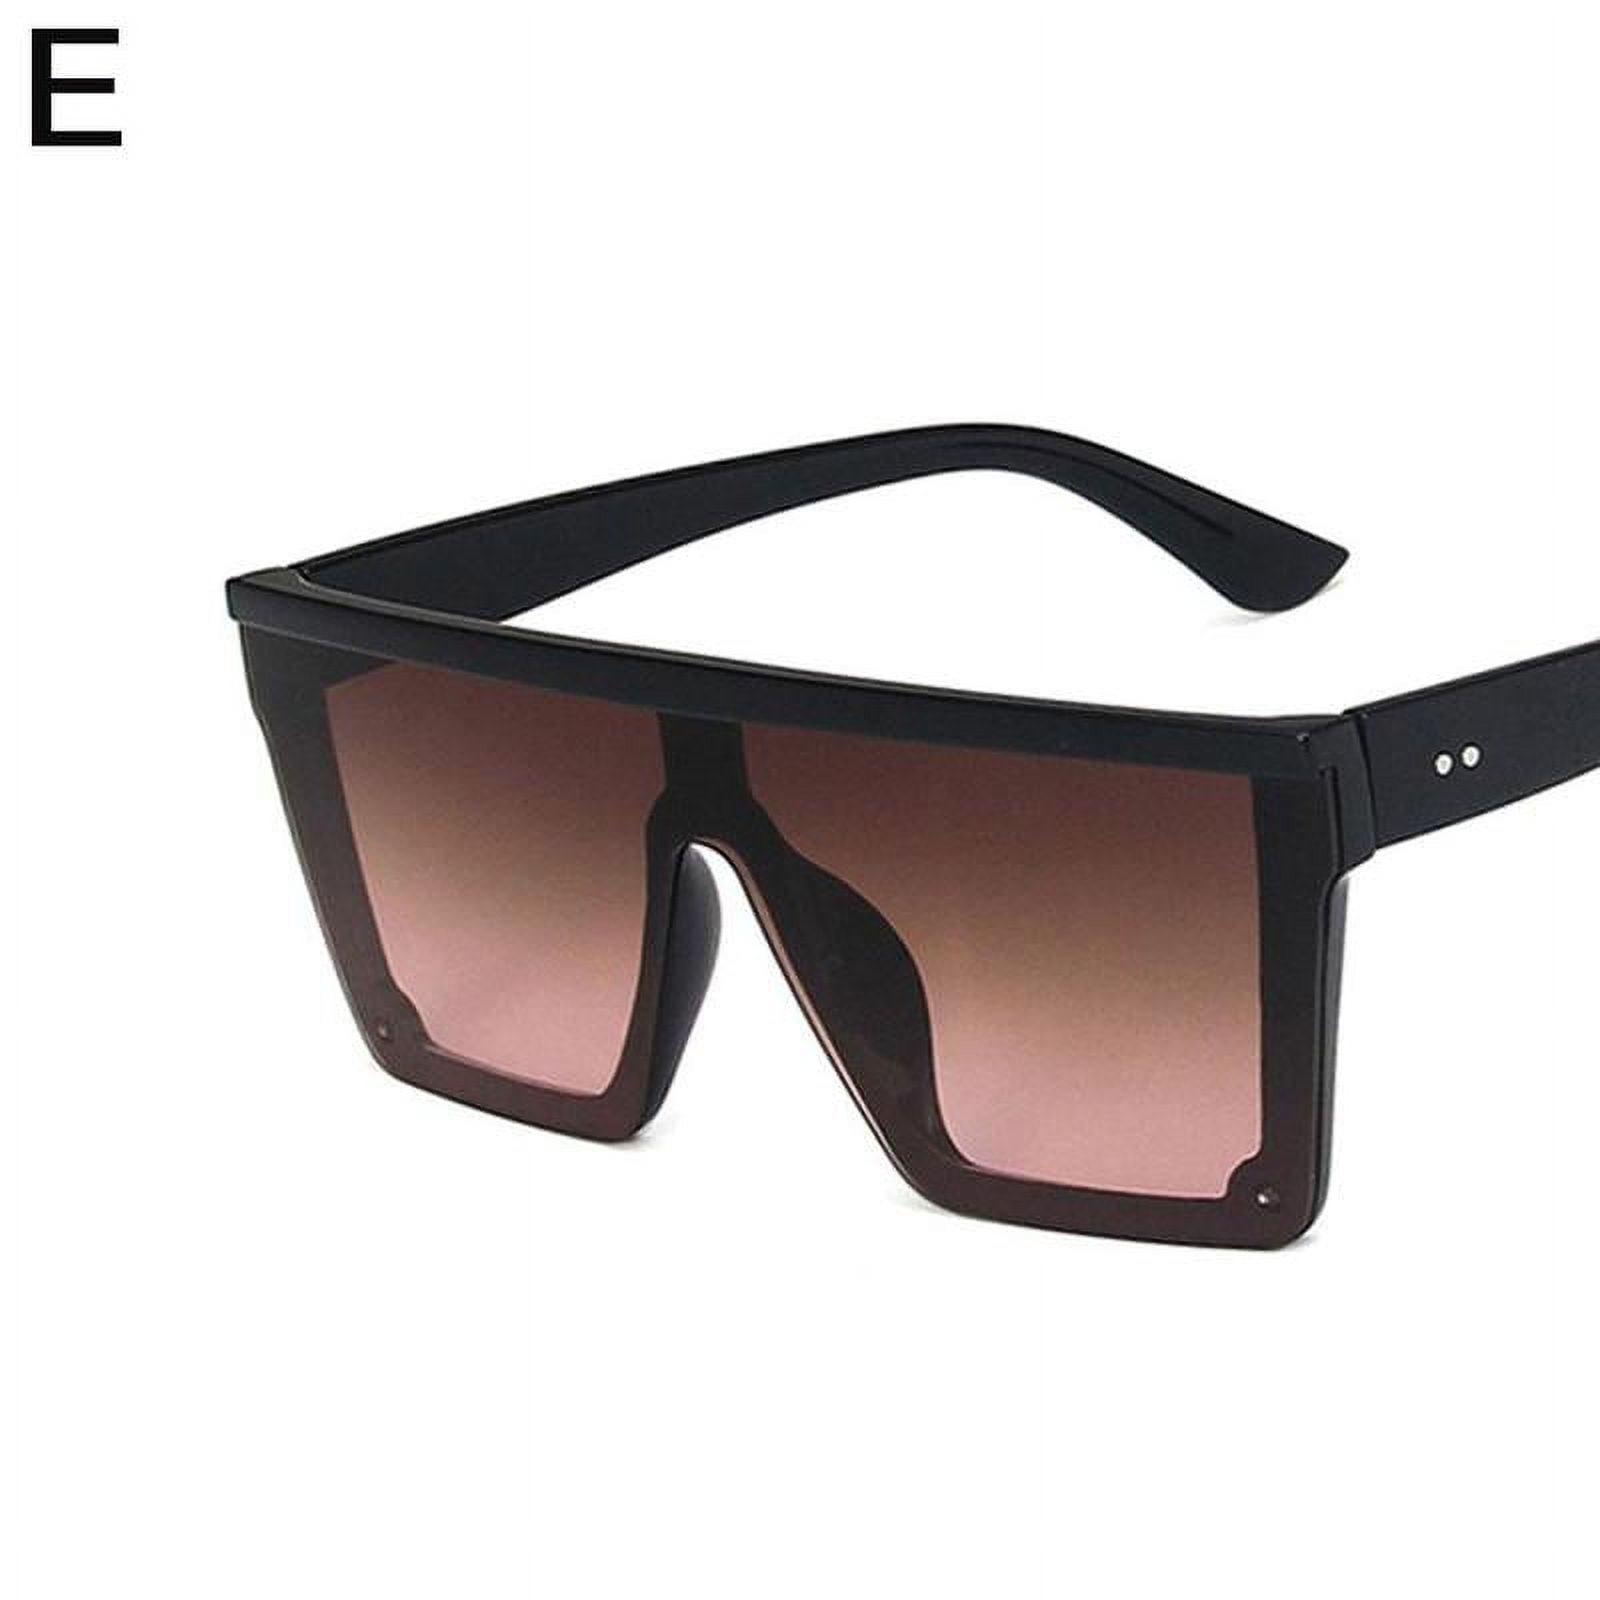 AUsagg Fashion Summer New Sunglasses Women Flat Top Square Glasses